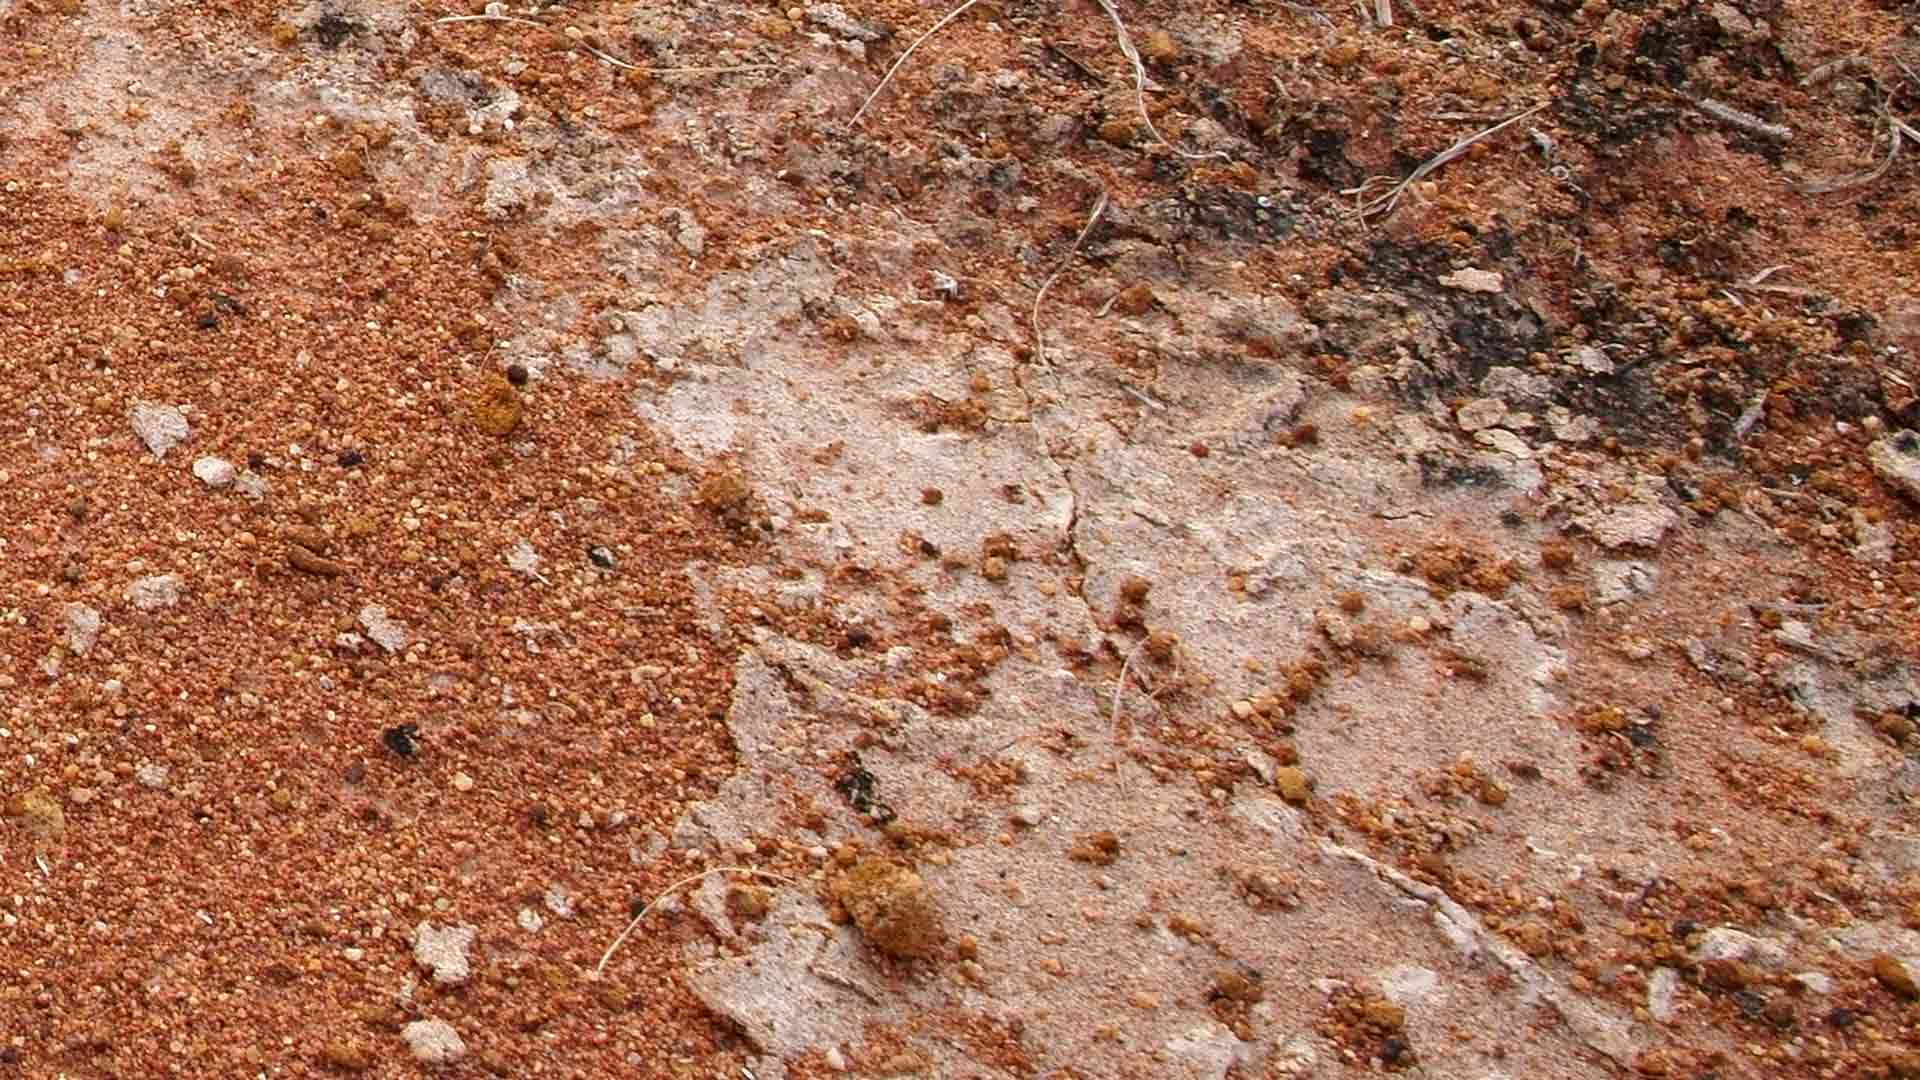 Acid Sulfate Soils